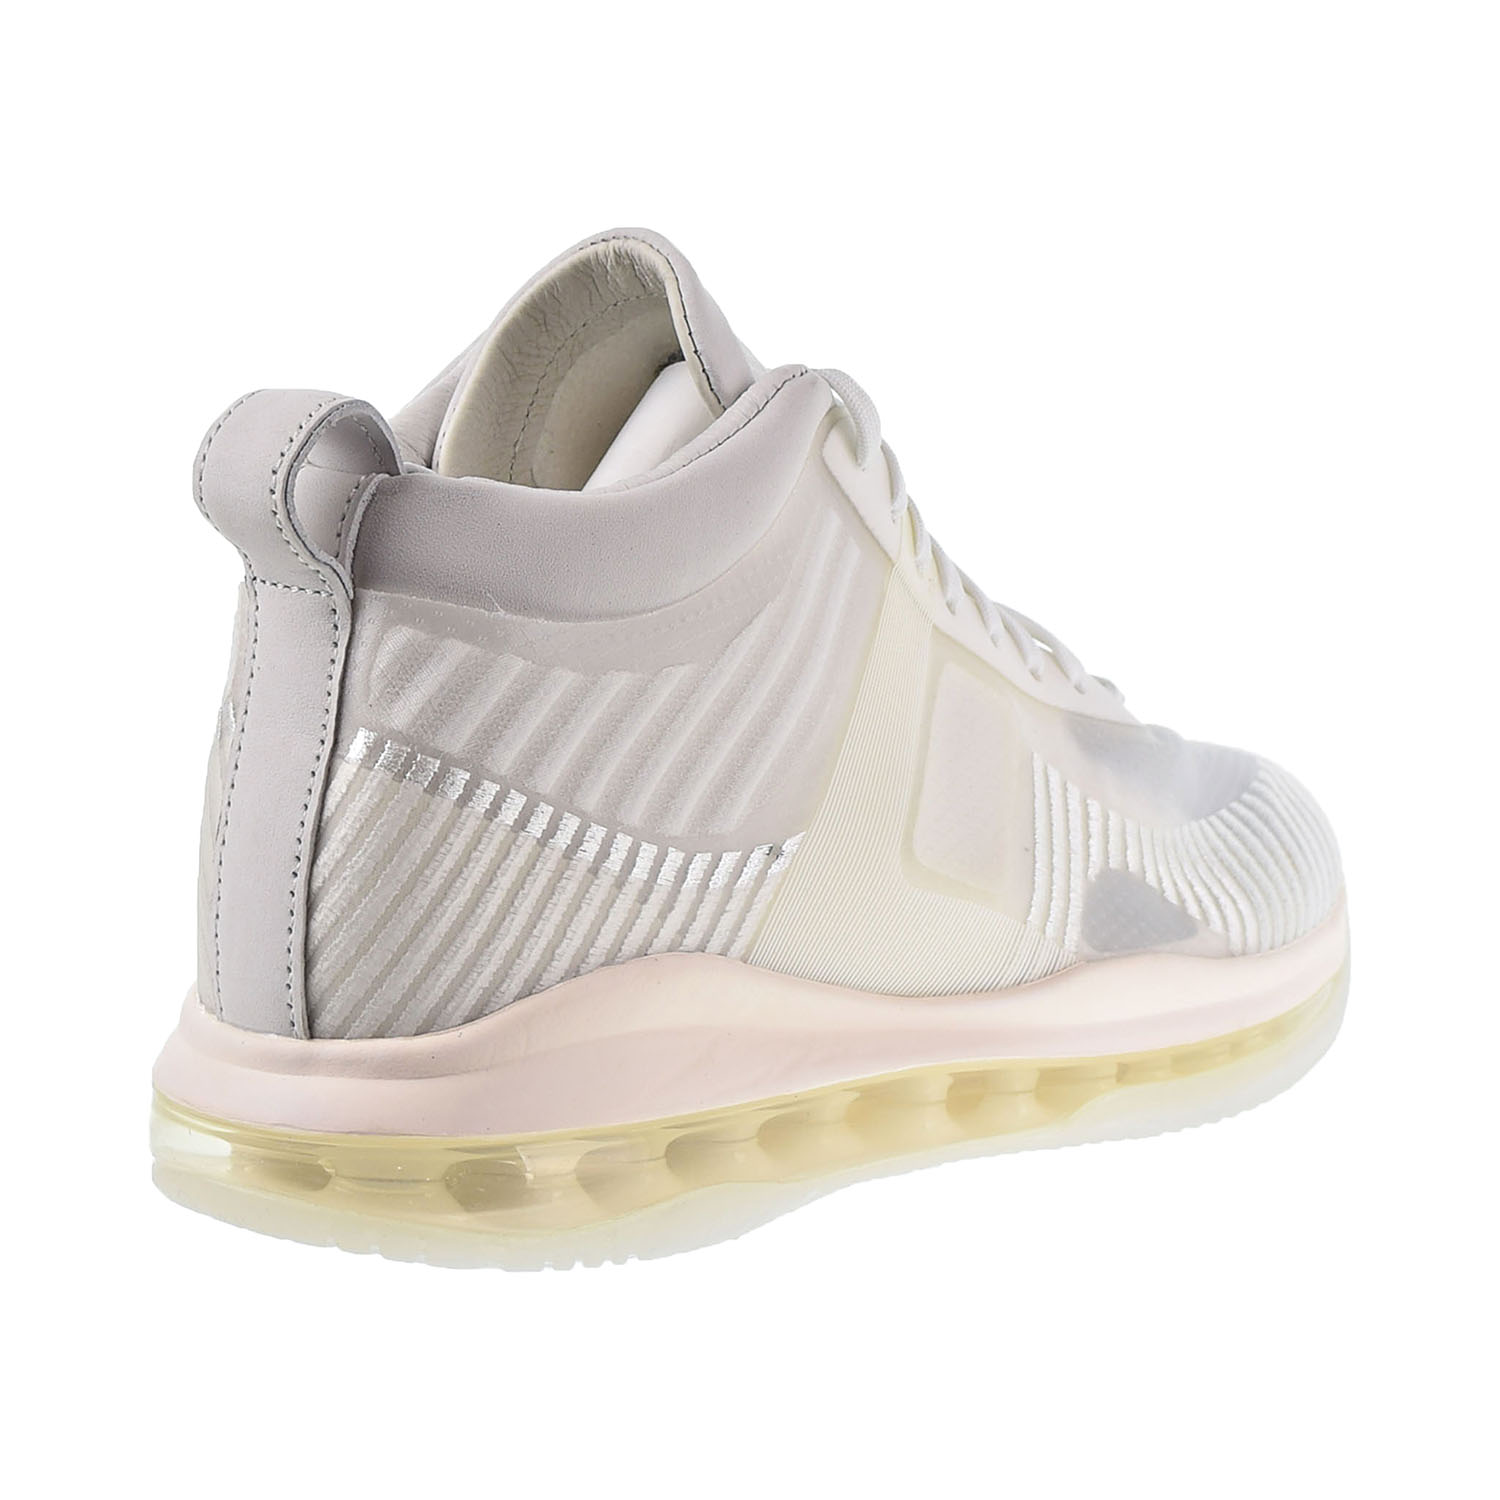 Nike Lebron X JE Icon QS Men's Shoes White-Sail-Summit White aq0114-101 - image 3 of 6